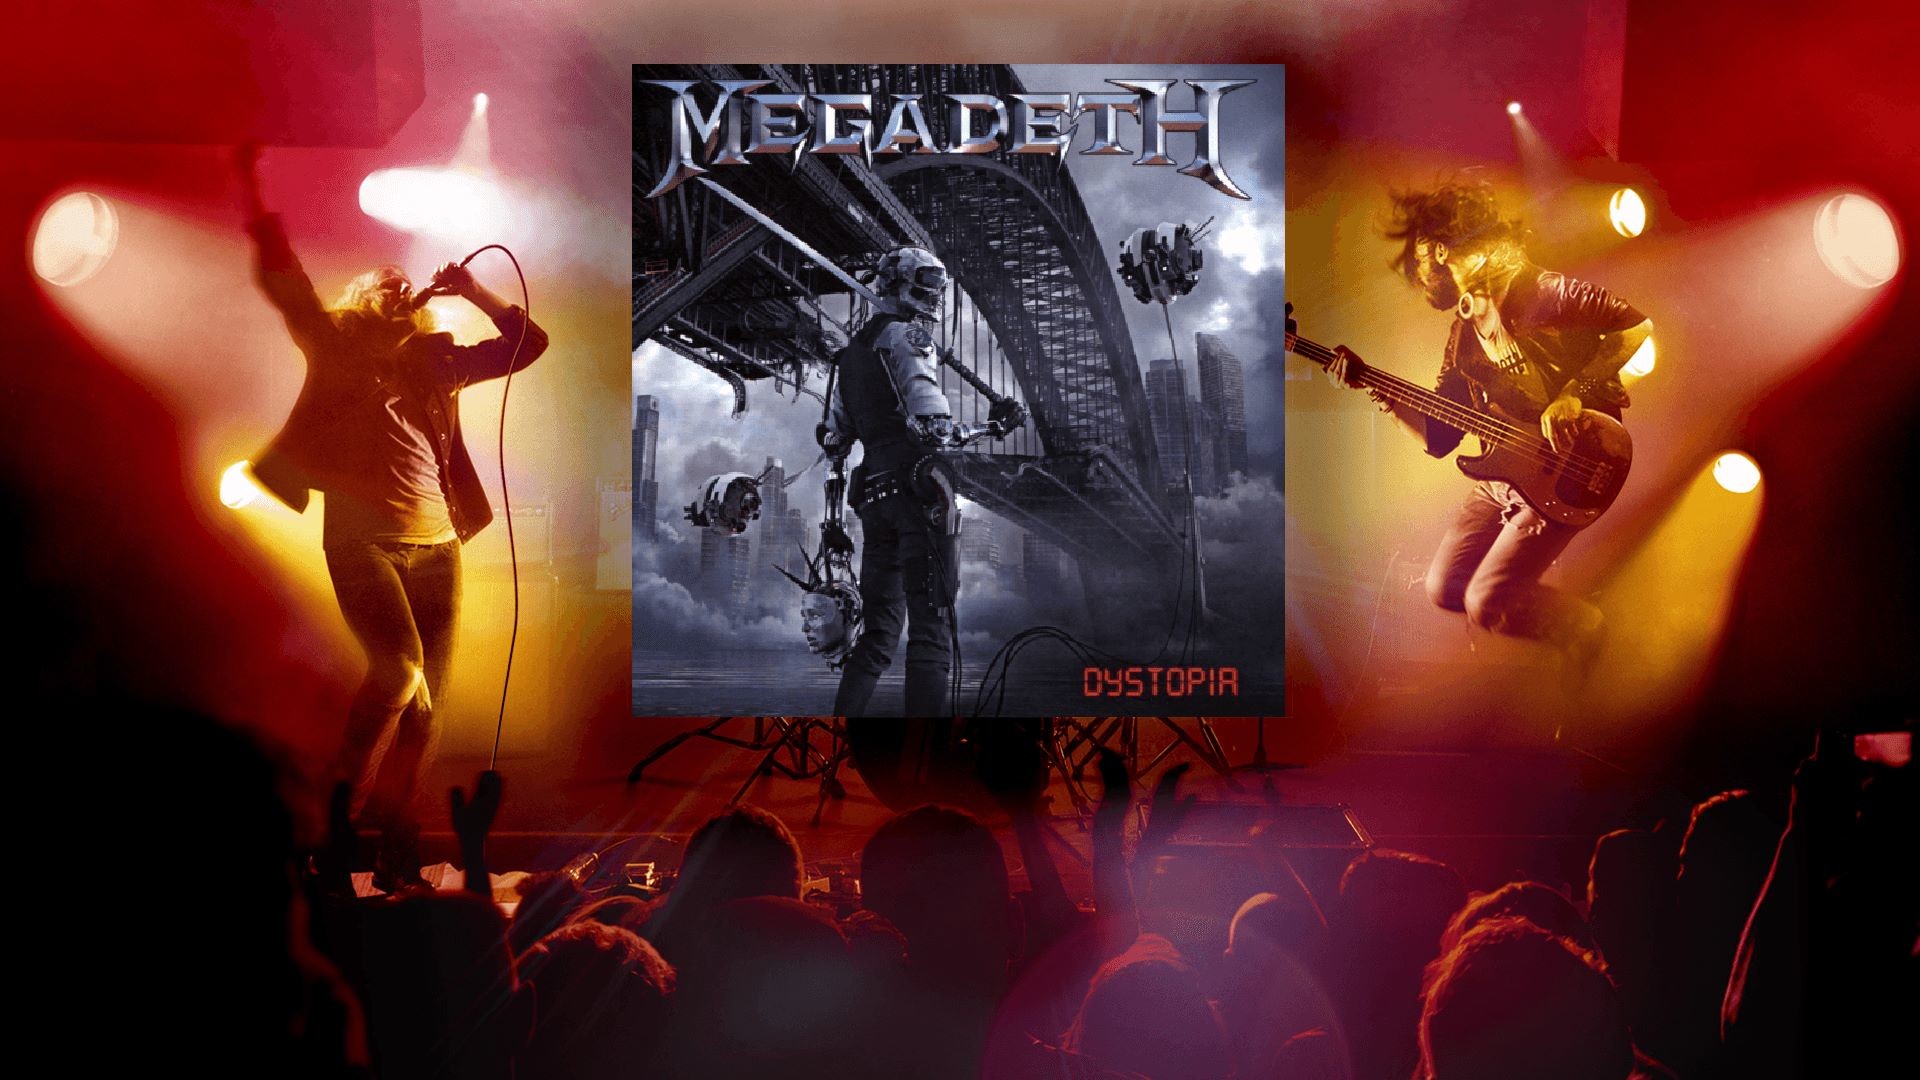 1920x1080 "Dystopia" - Megadeth. "